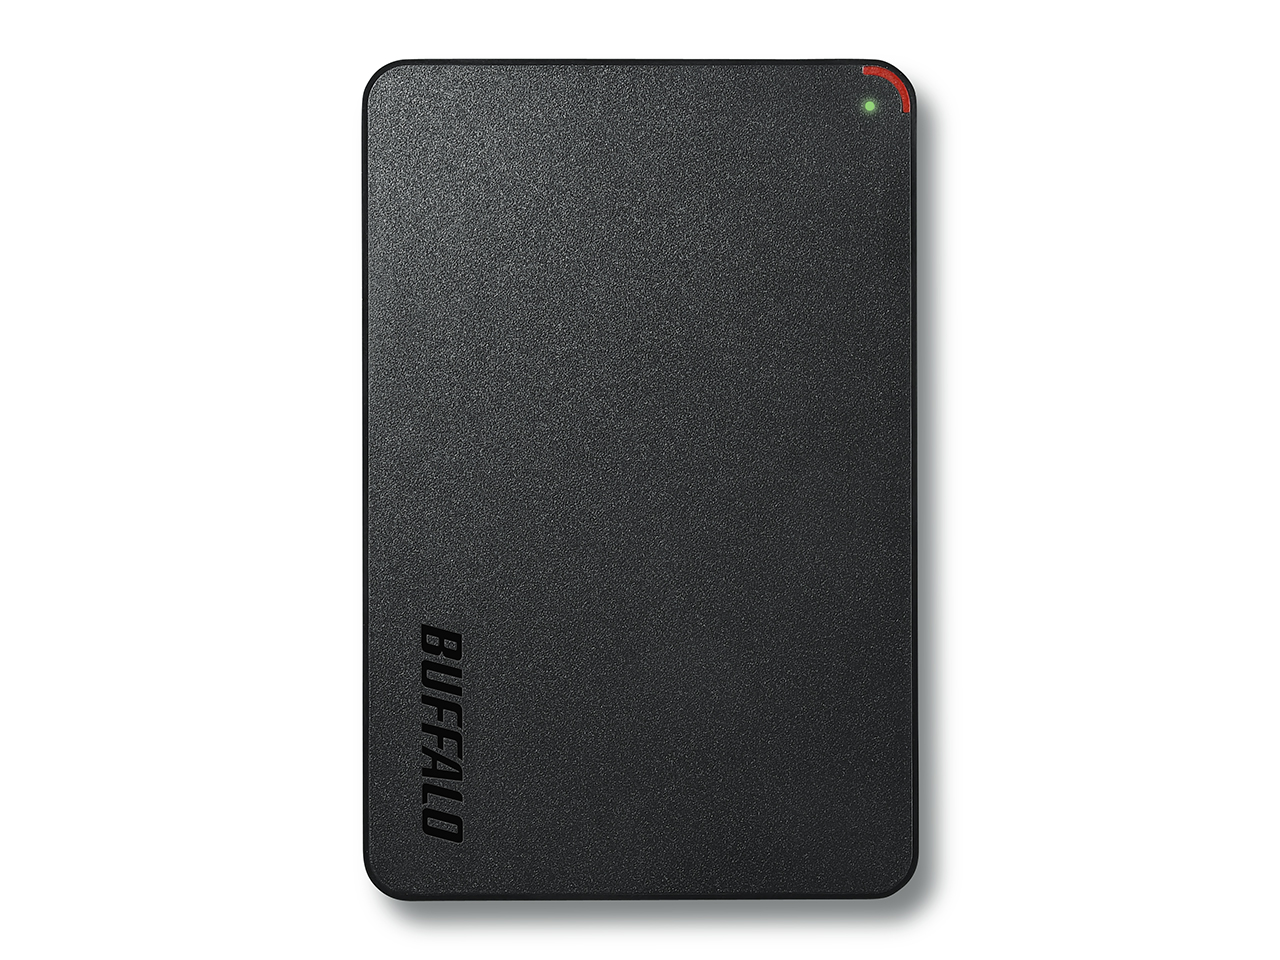 Ministation 2tb portable HDD USB3 Black